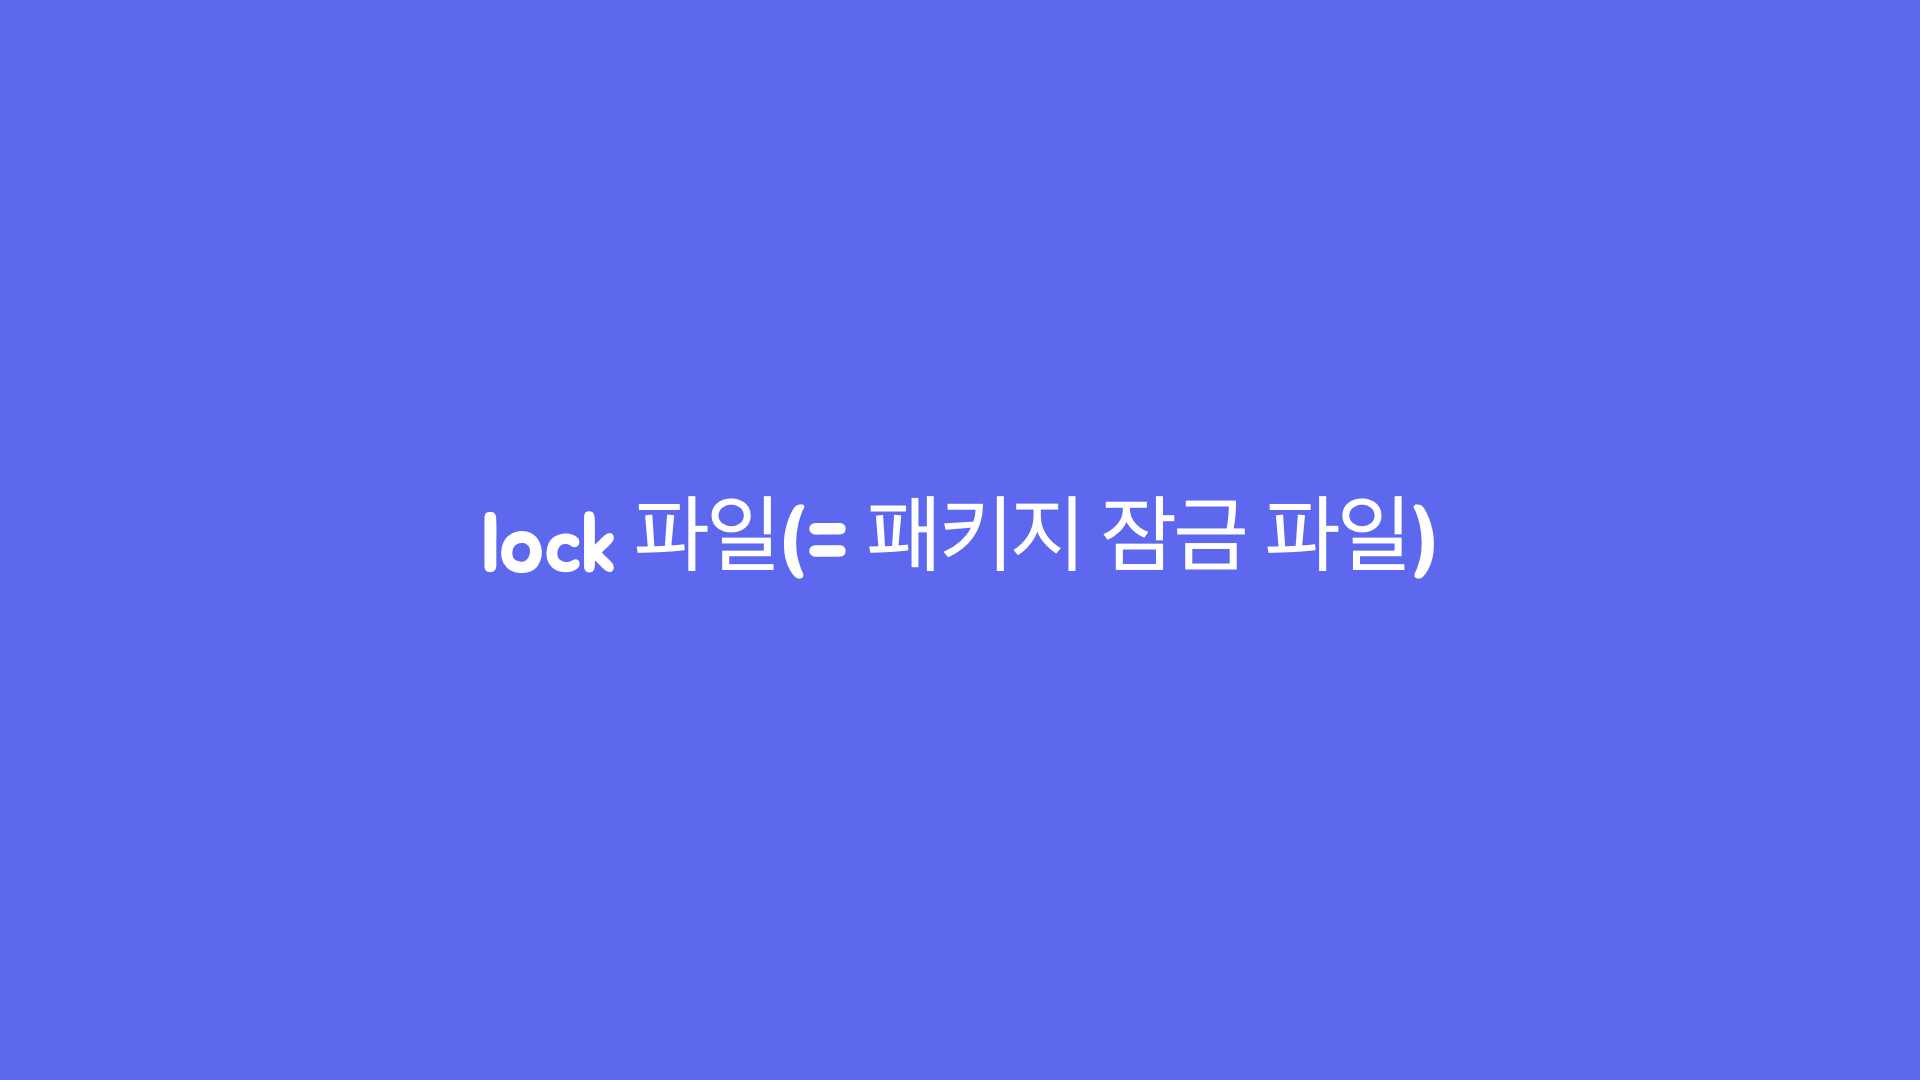 lock 파일(= 패키지 잠금 파일) 히어로 이미지.jpeg